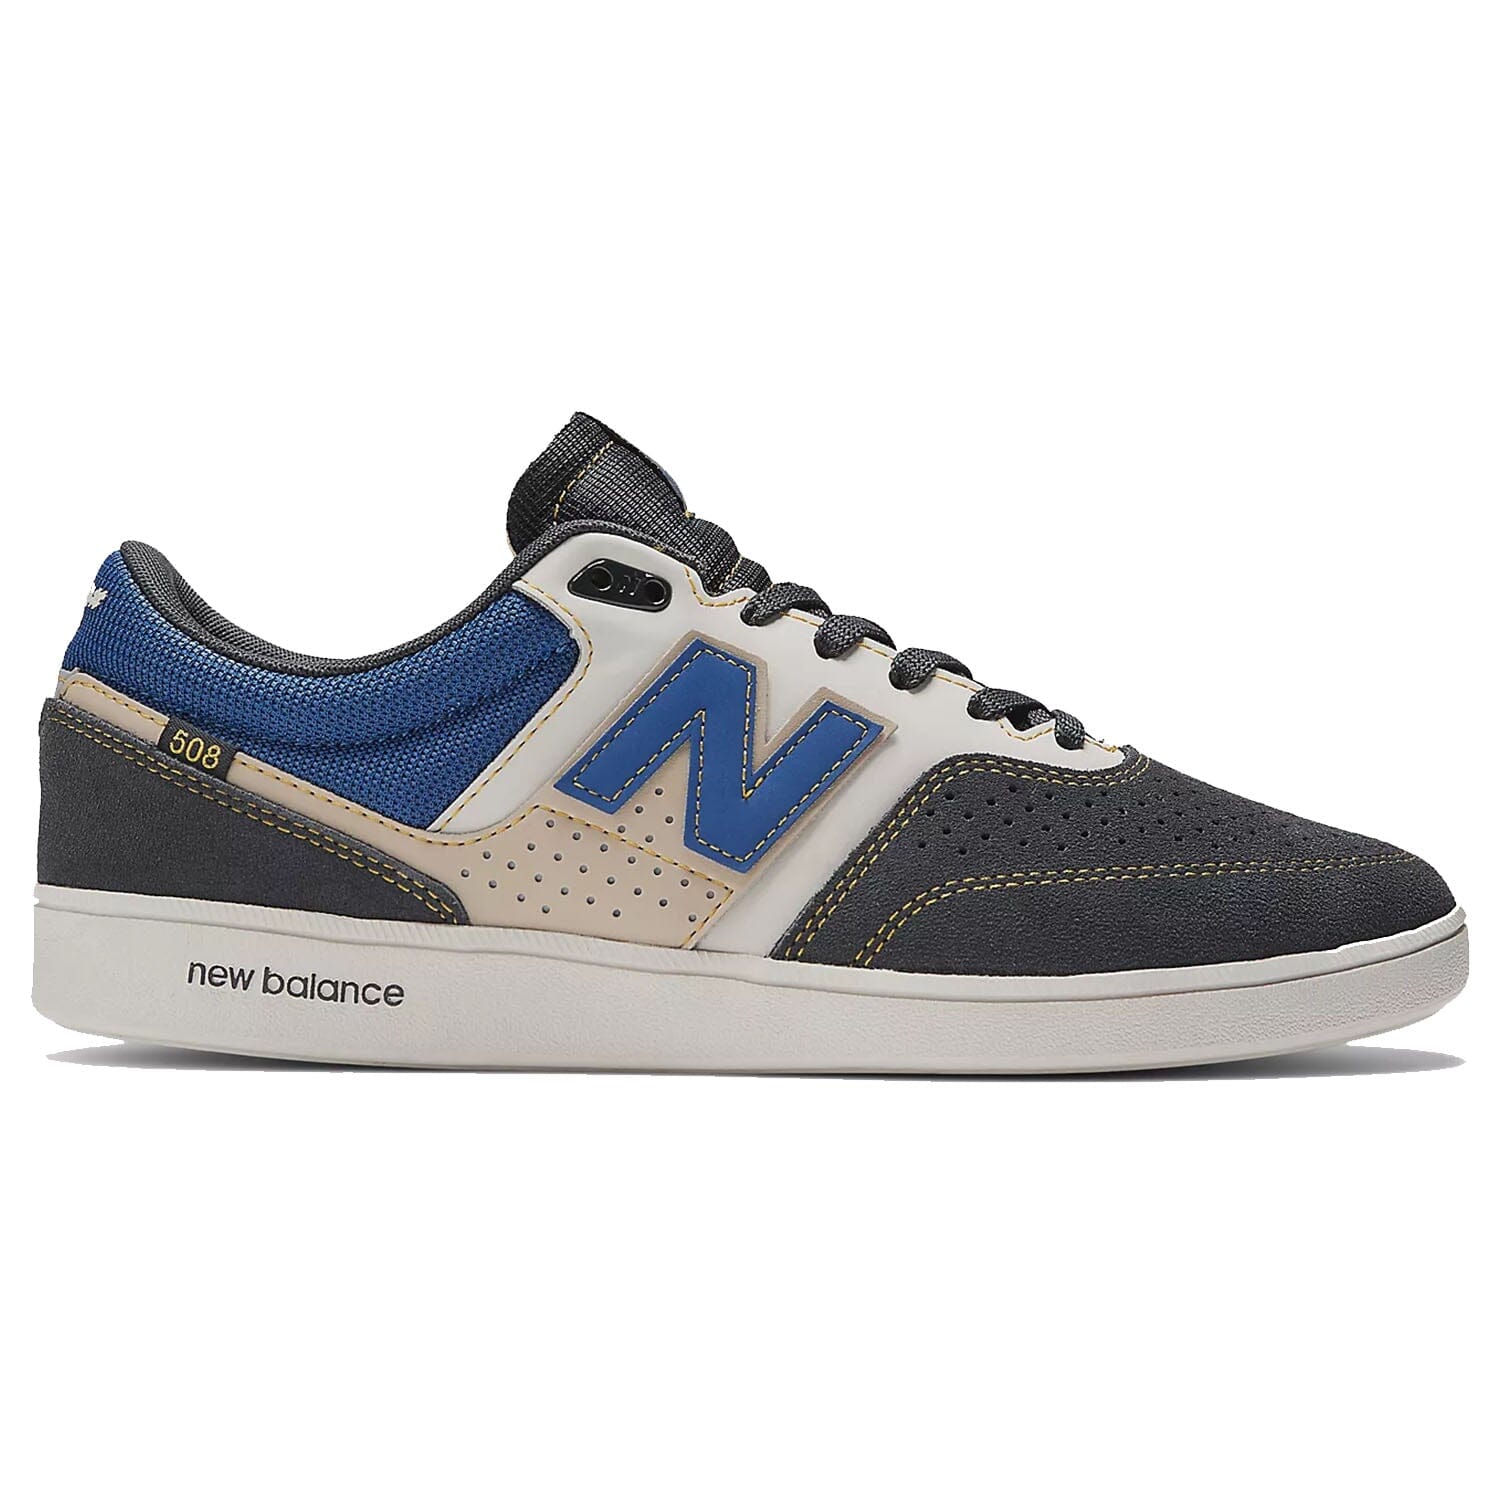 New Balance Numeric NM508 Navy/Royal Blue footwear New Balance Numeric 